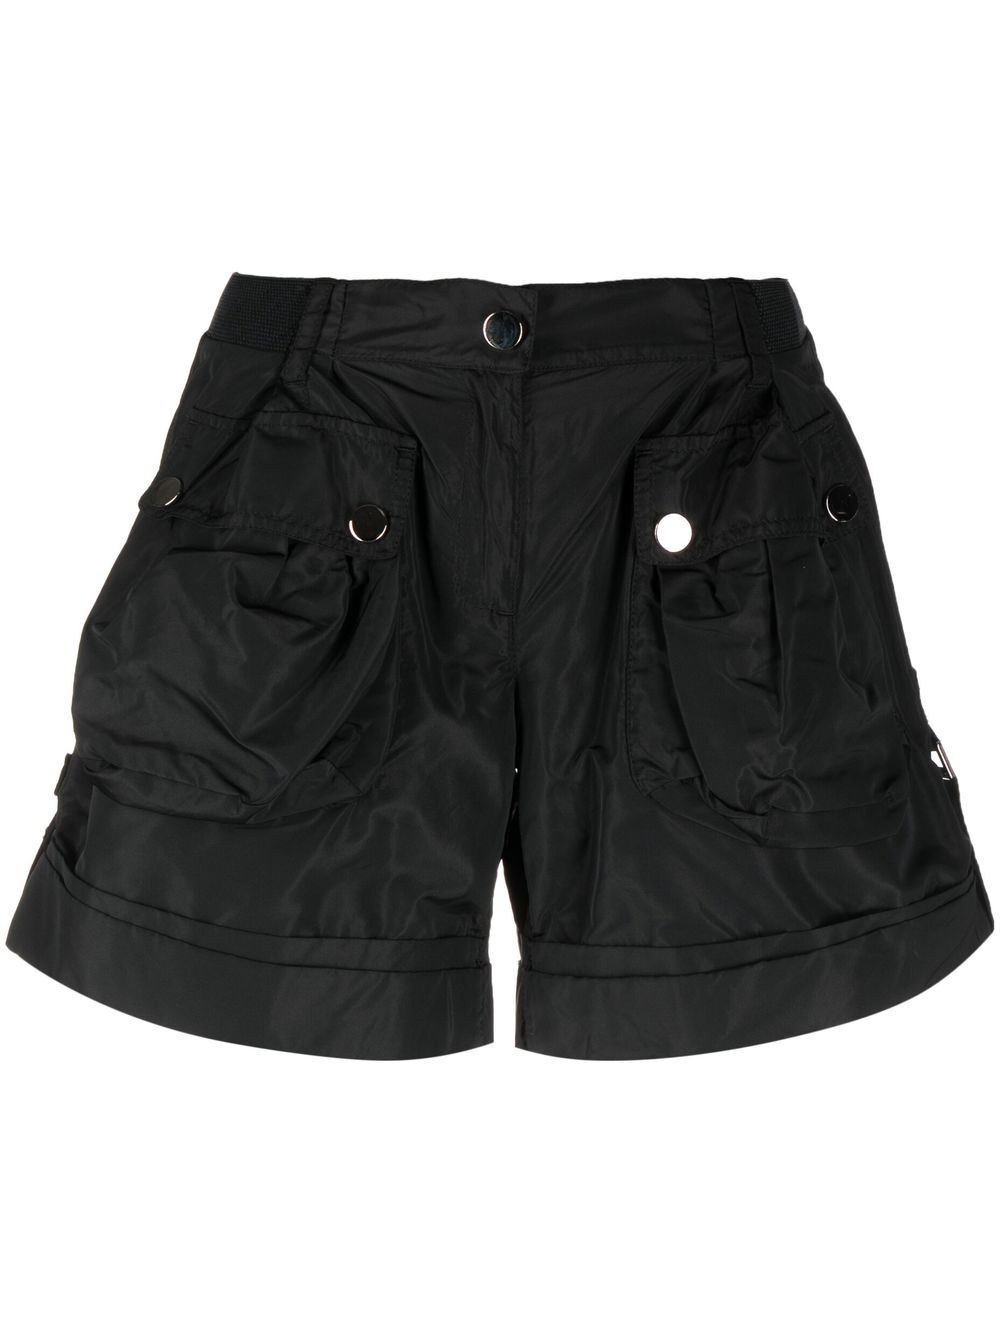 Dolce & Gabbana Pre-Owned 1990s flap-pocket shorts - Black